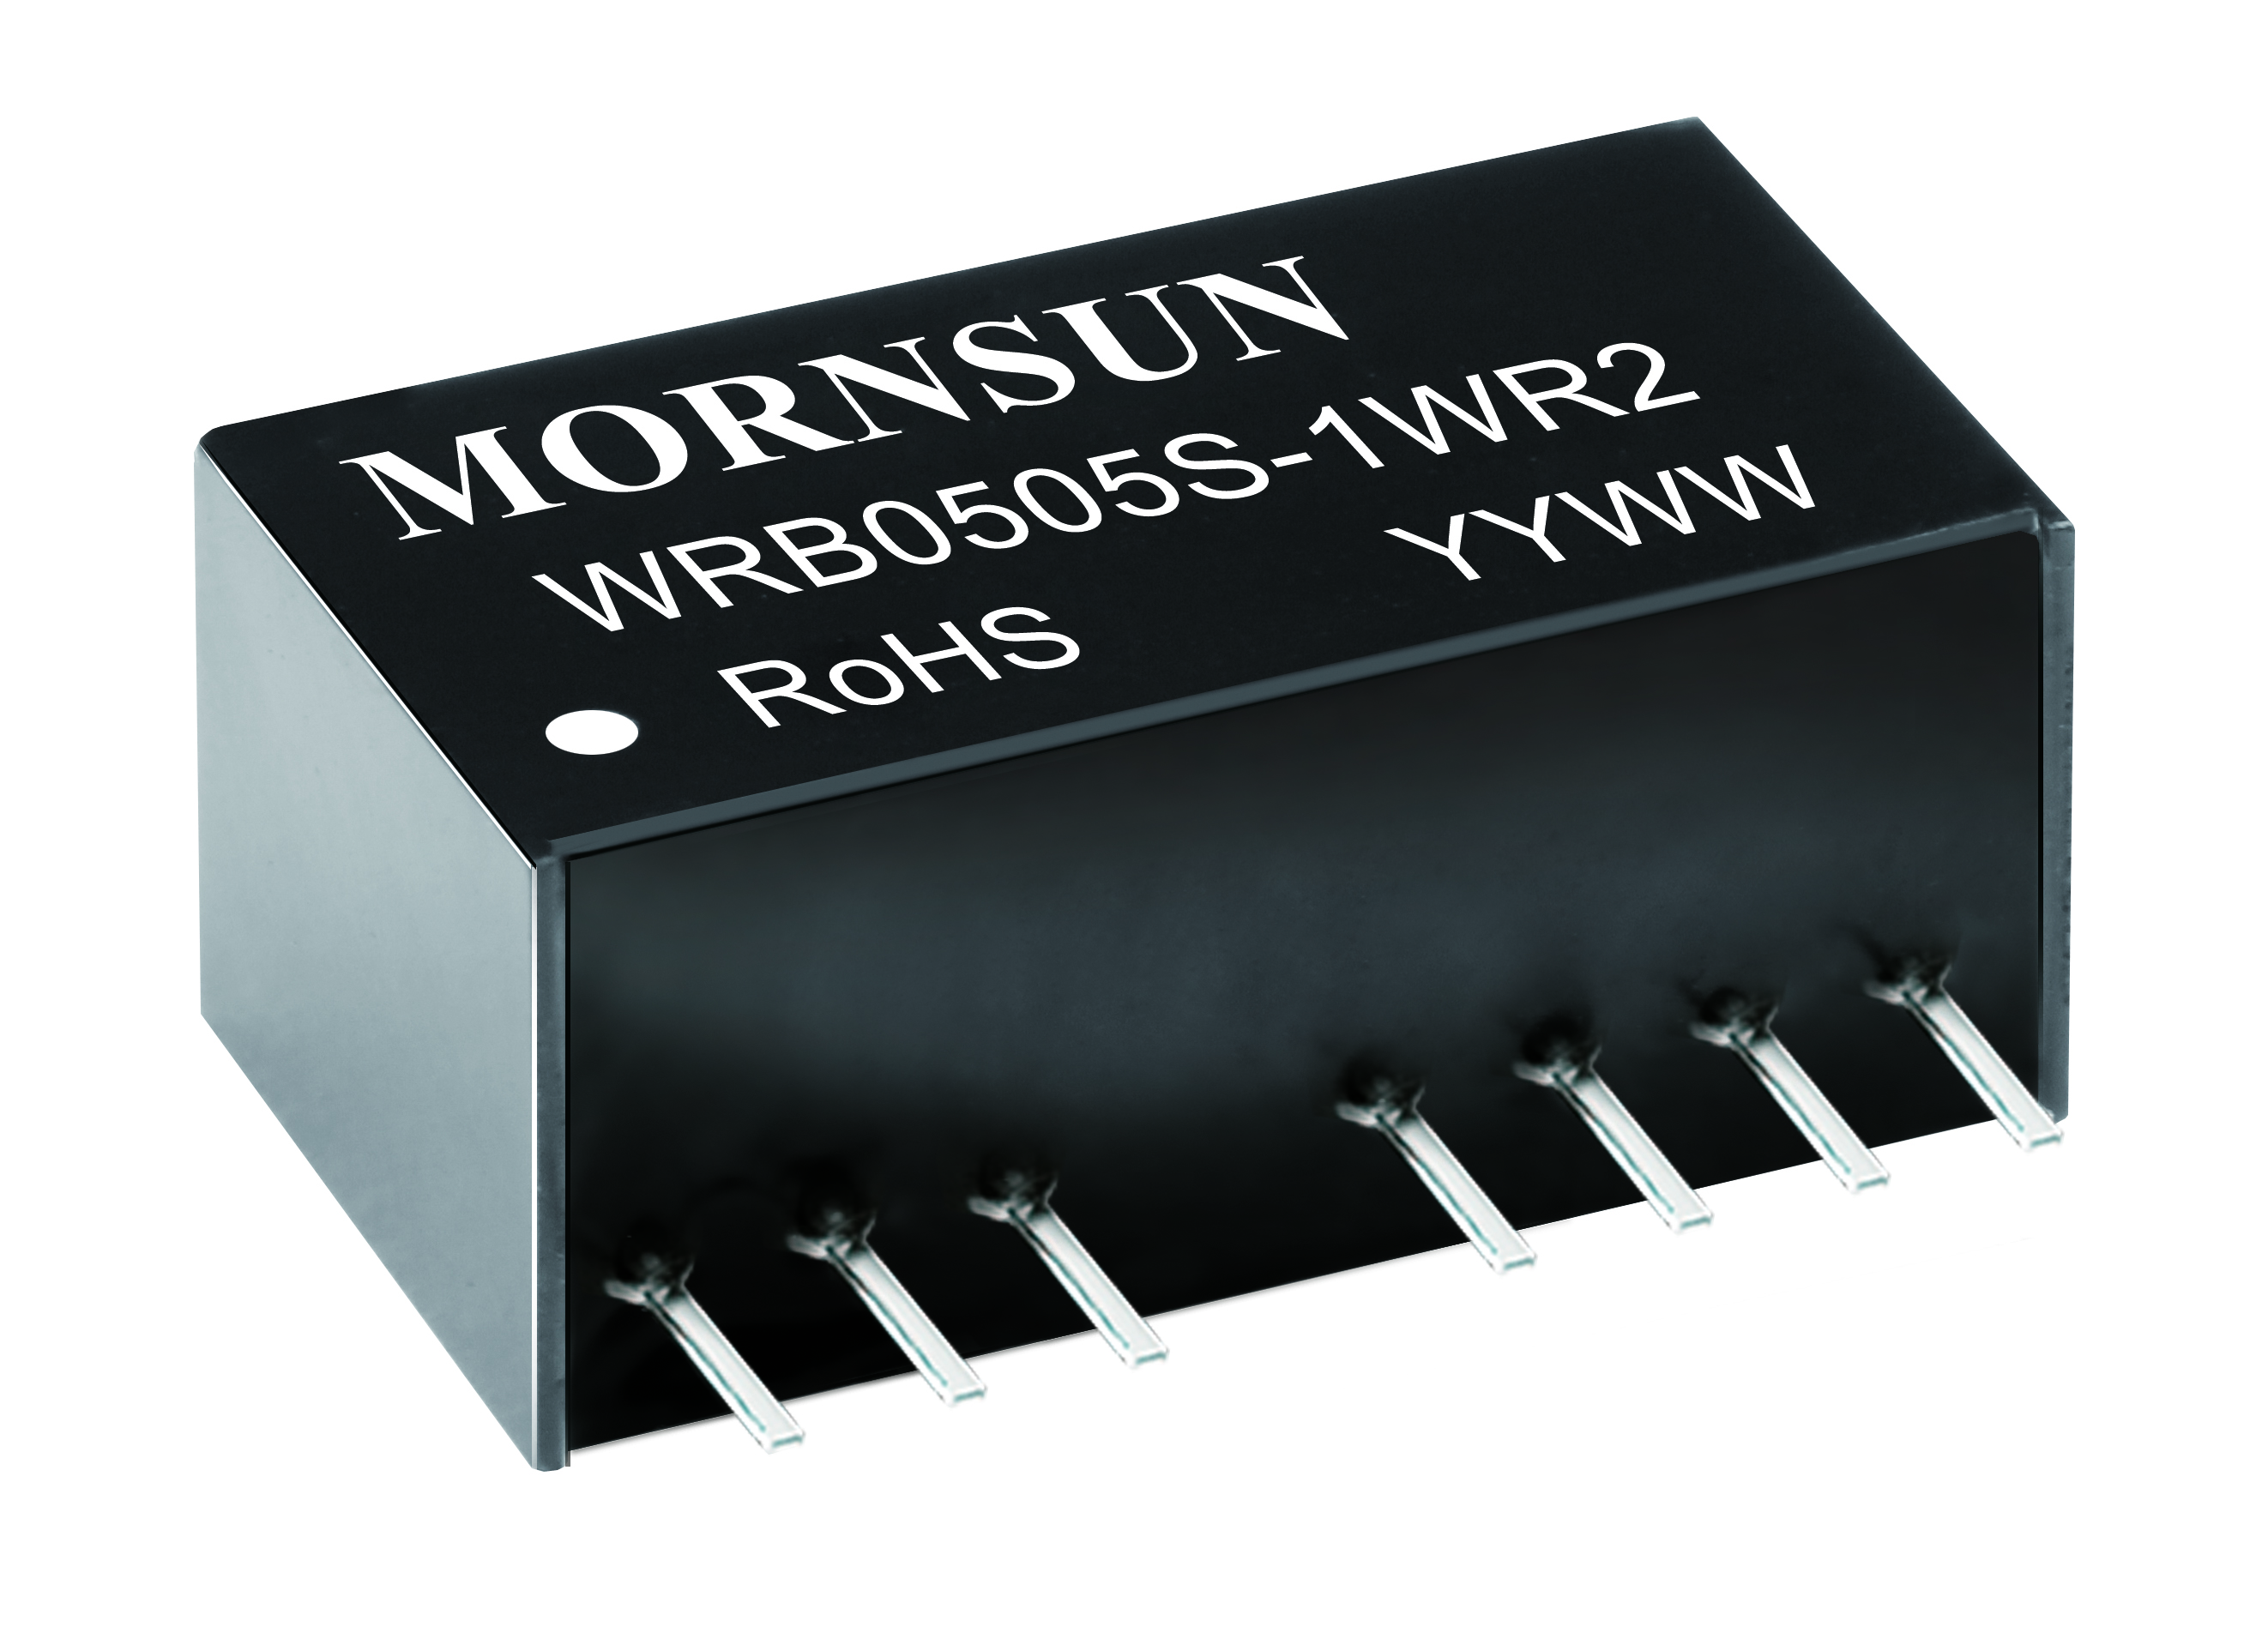 WRB4805S-1WR2 | MORNSUN